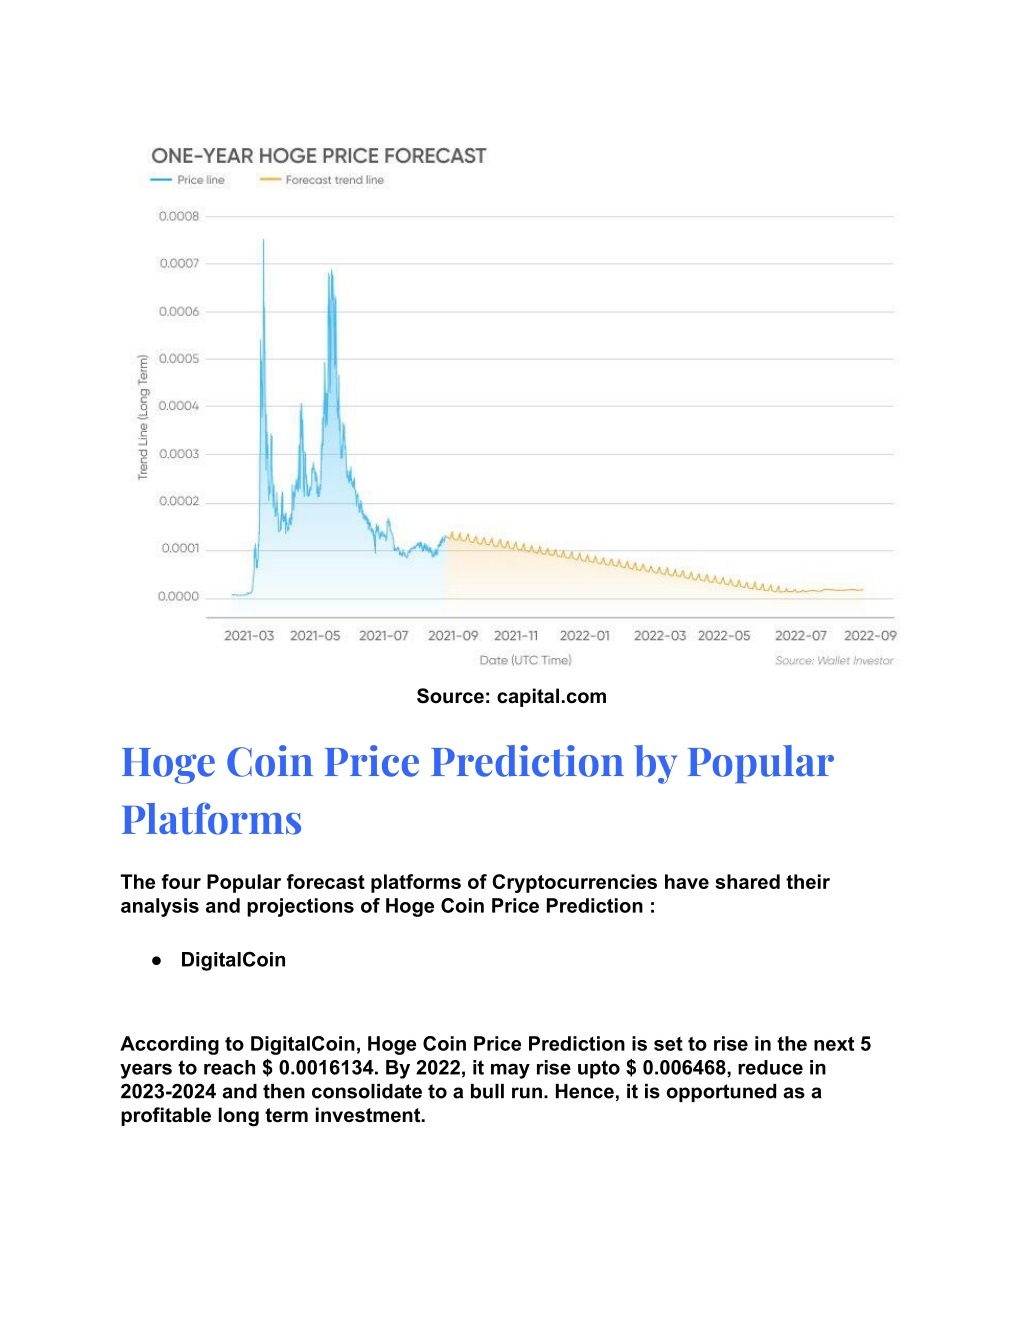 hoge finance price prediction 2025